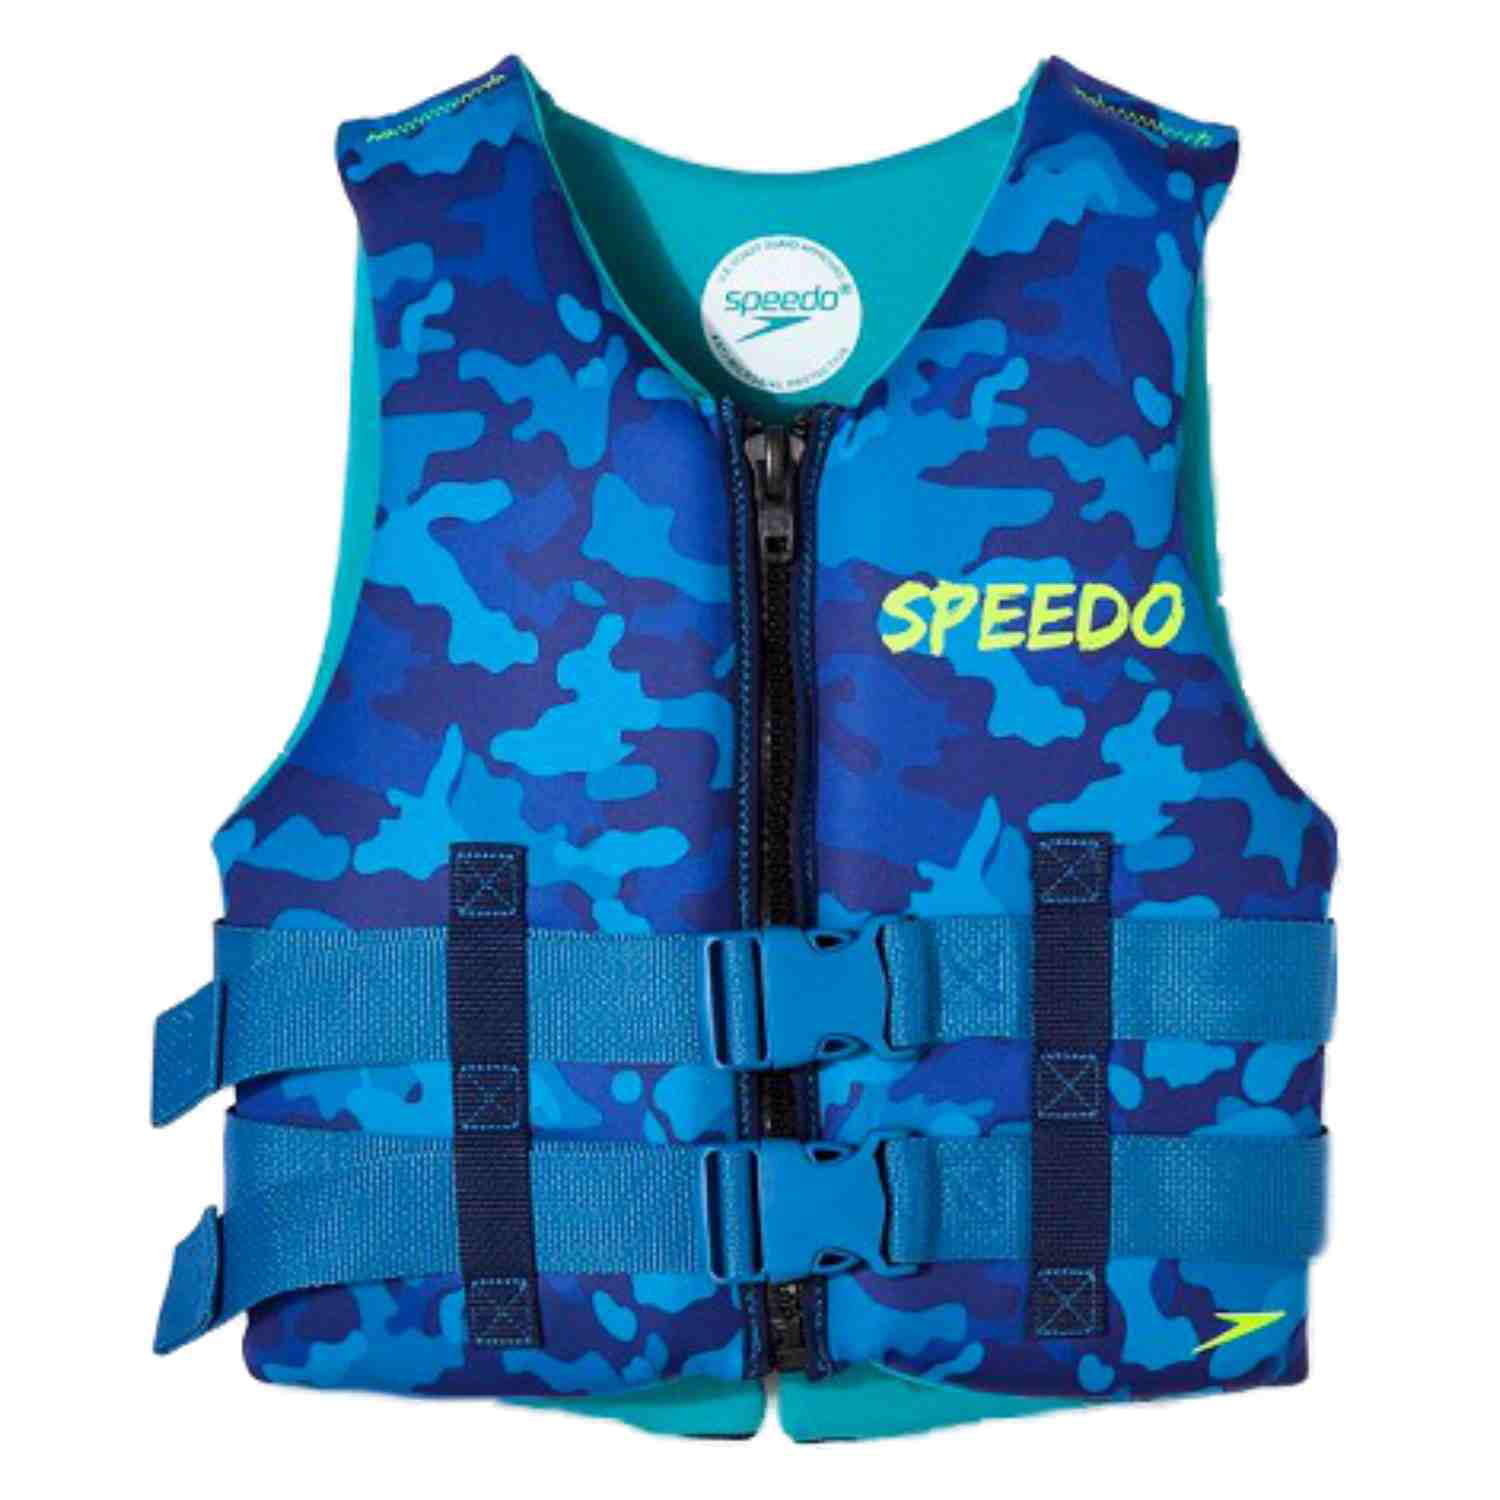 Speedo Kid US Coast Guard Approved Neoprene Life Jacket Preserver Vest Child PFD 